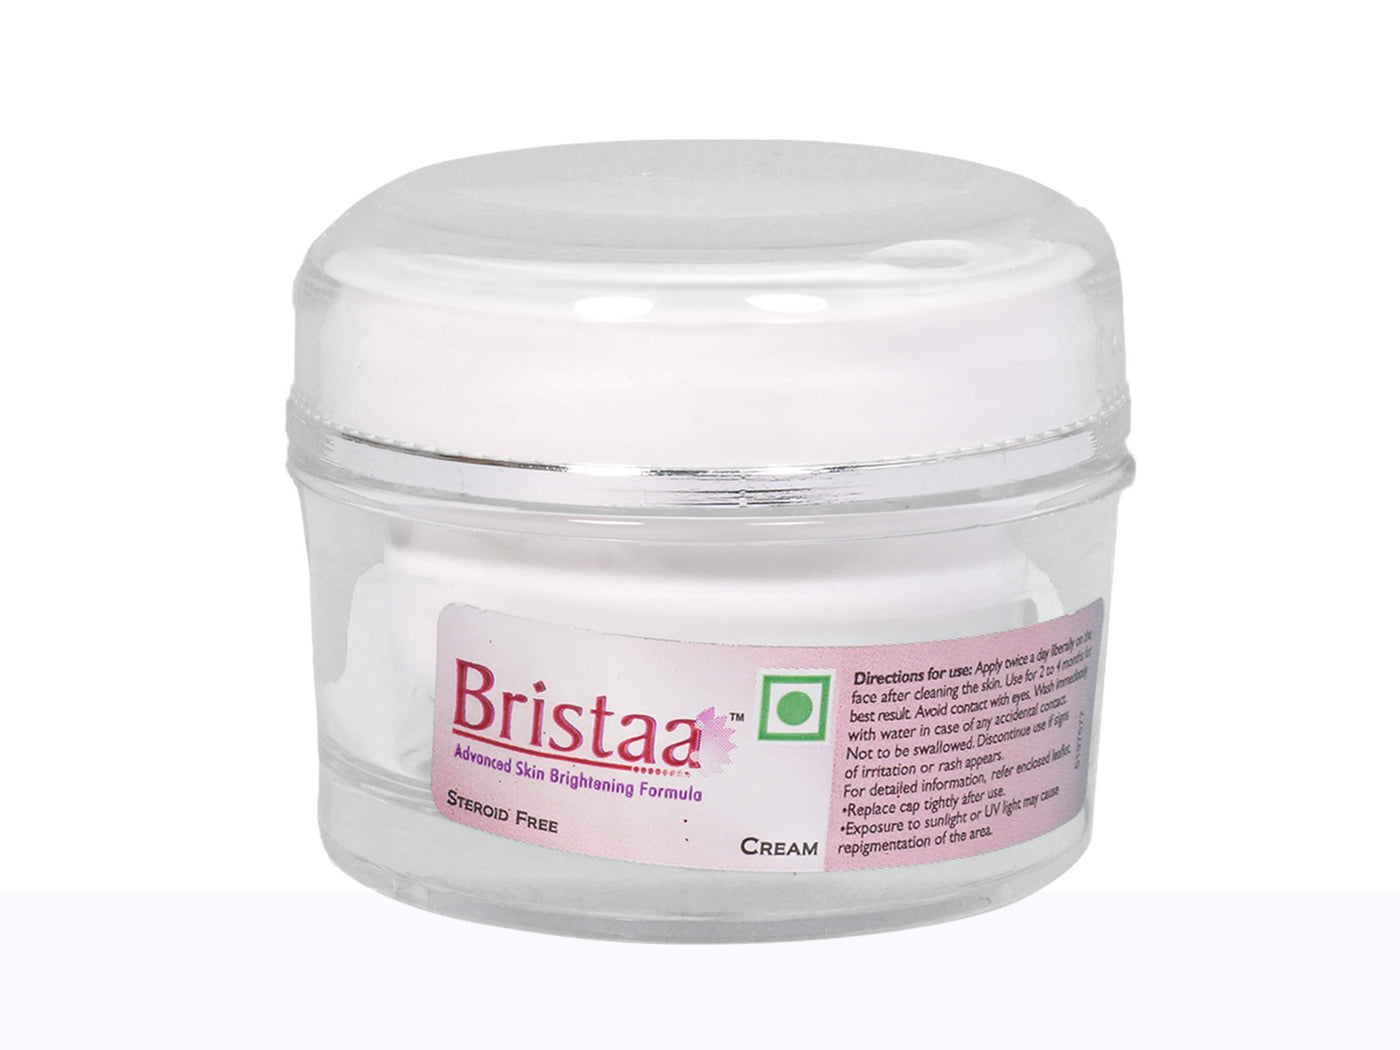 Bristaa Advanced Skin Brightening Formula - Clinikally